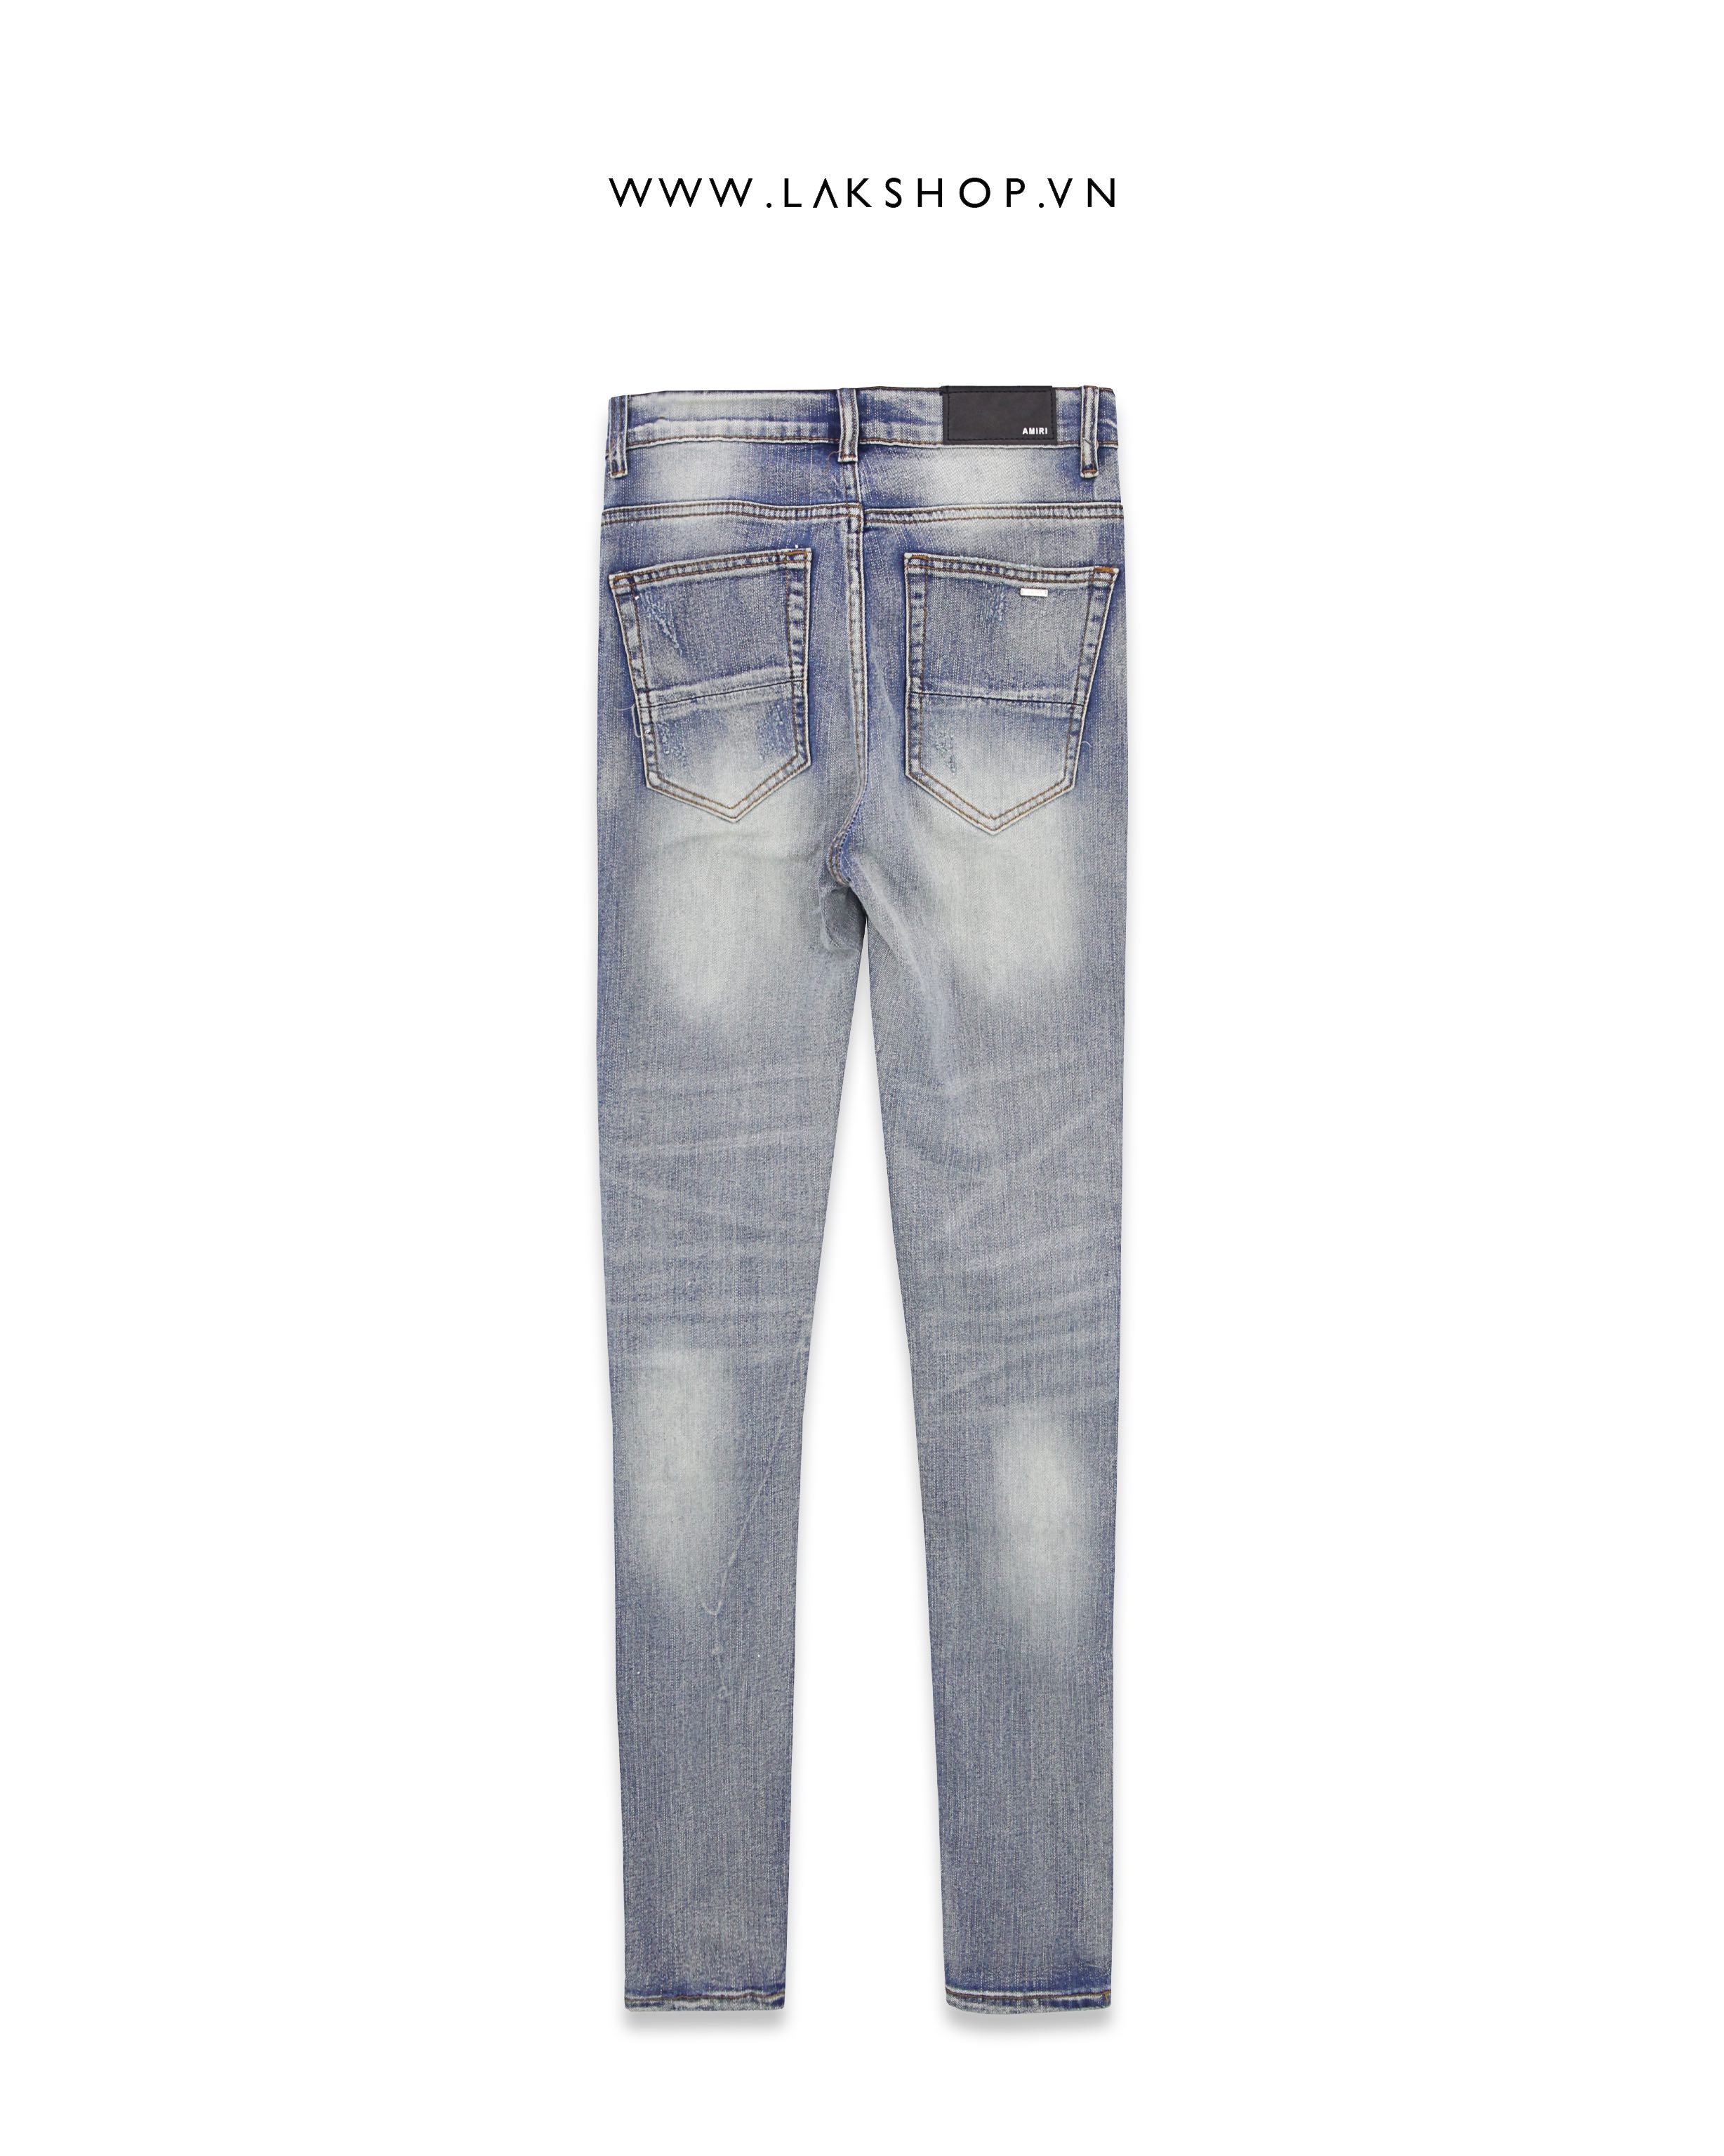 Amjrj Cherub Print Jeans